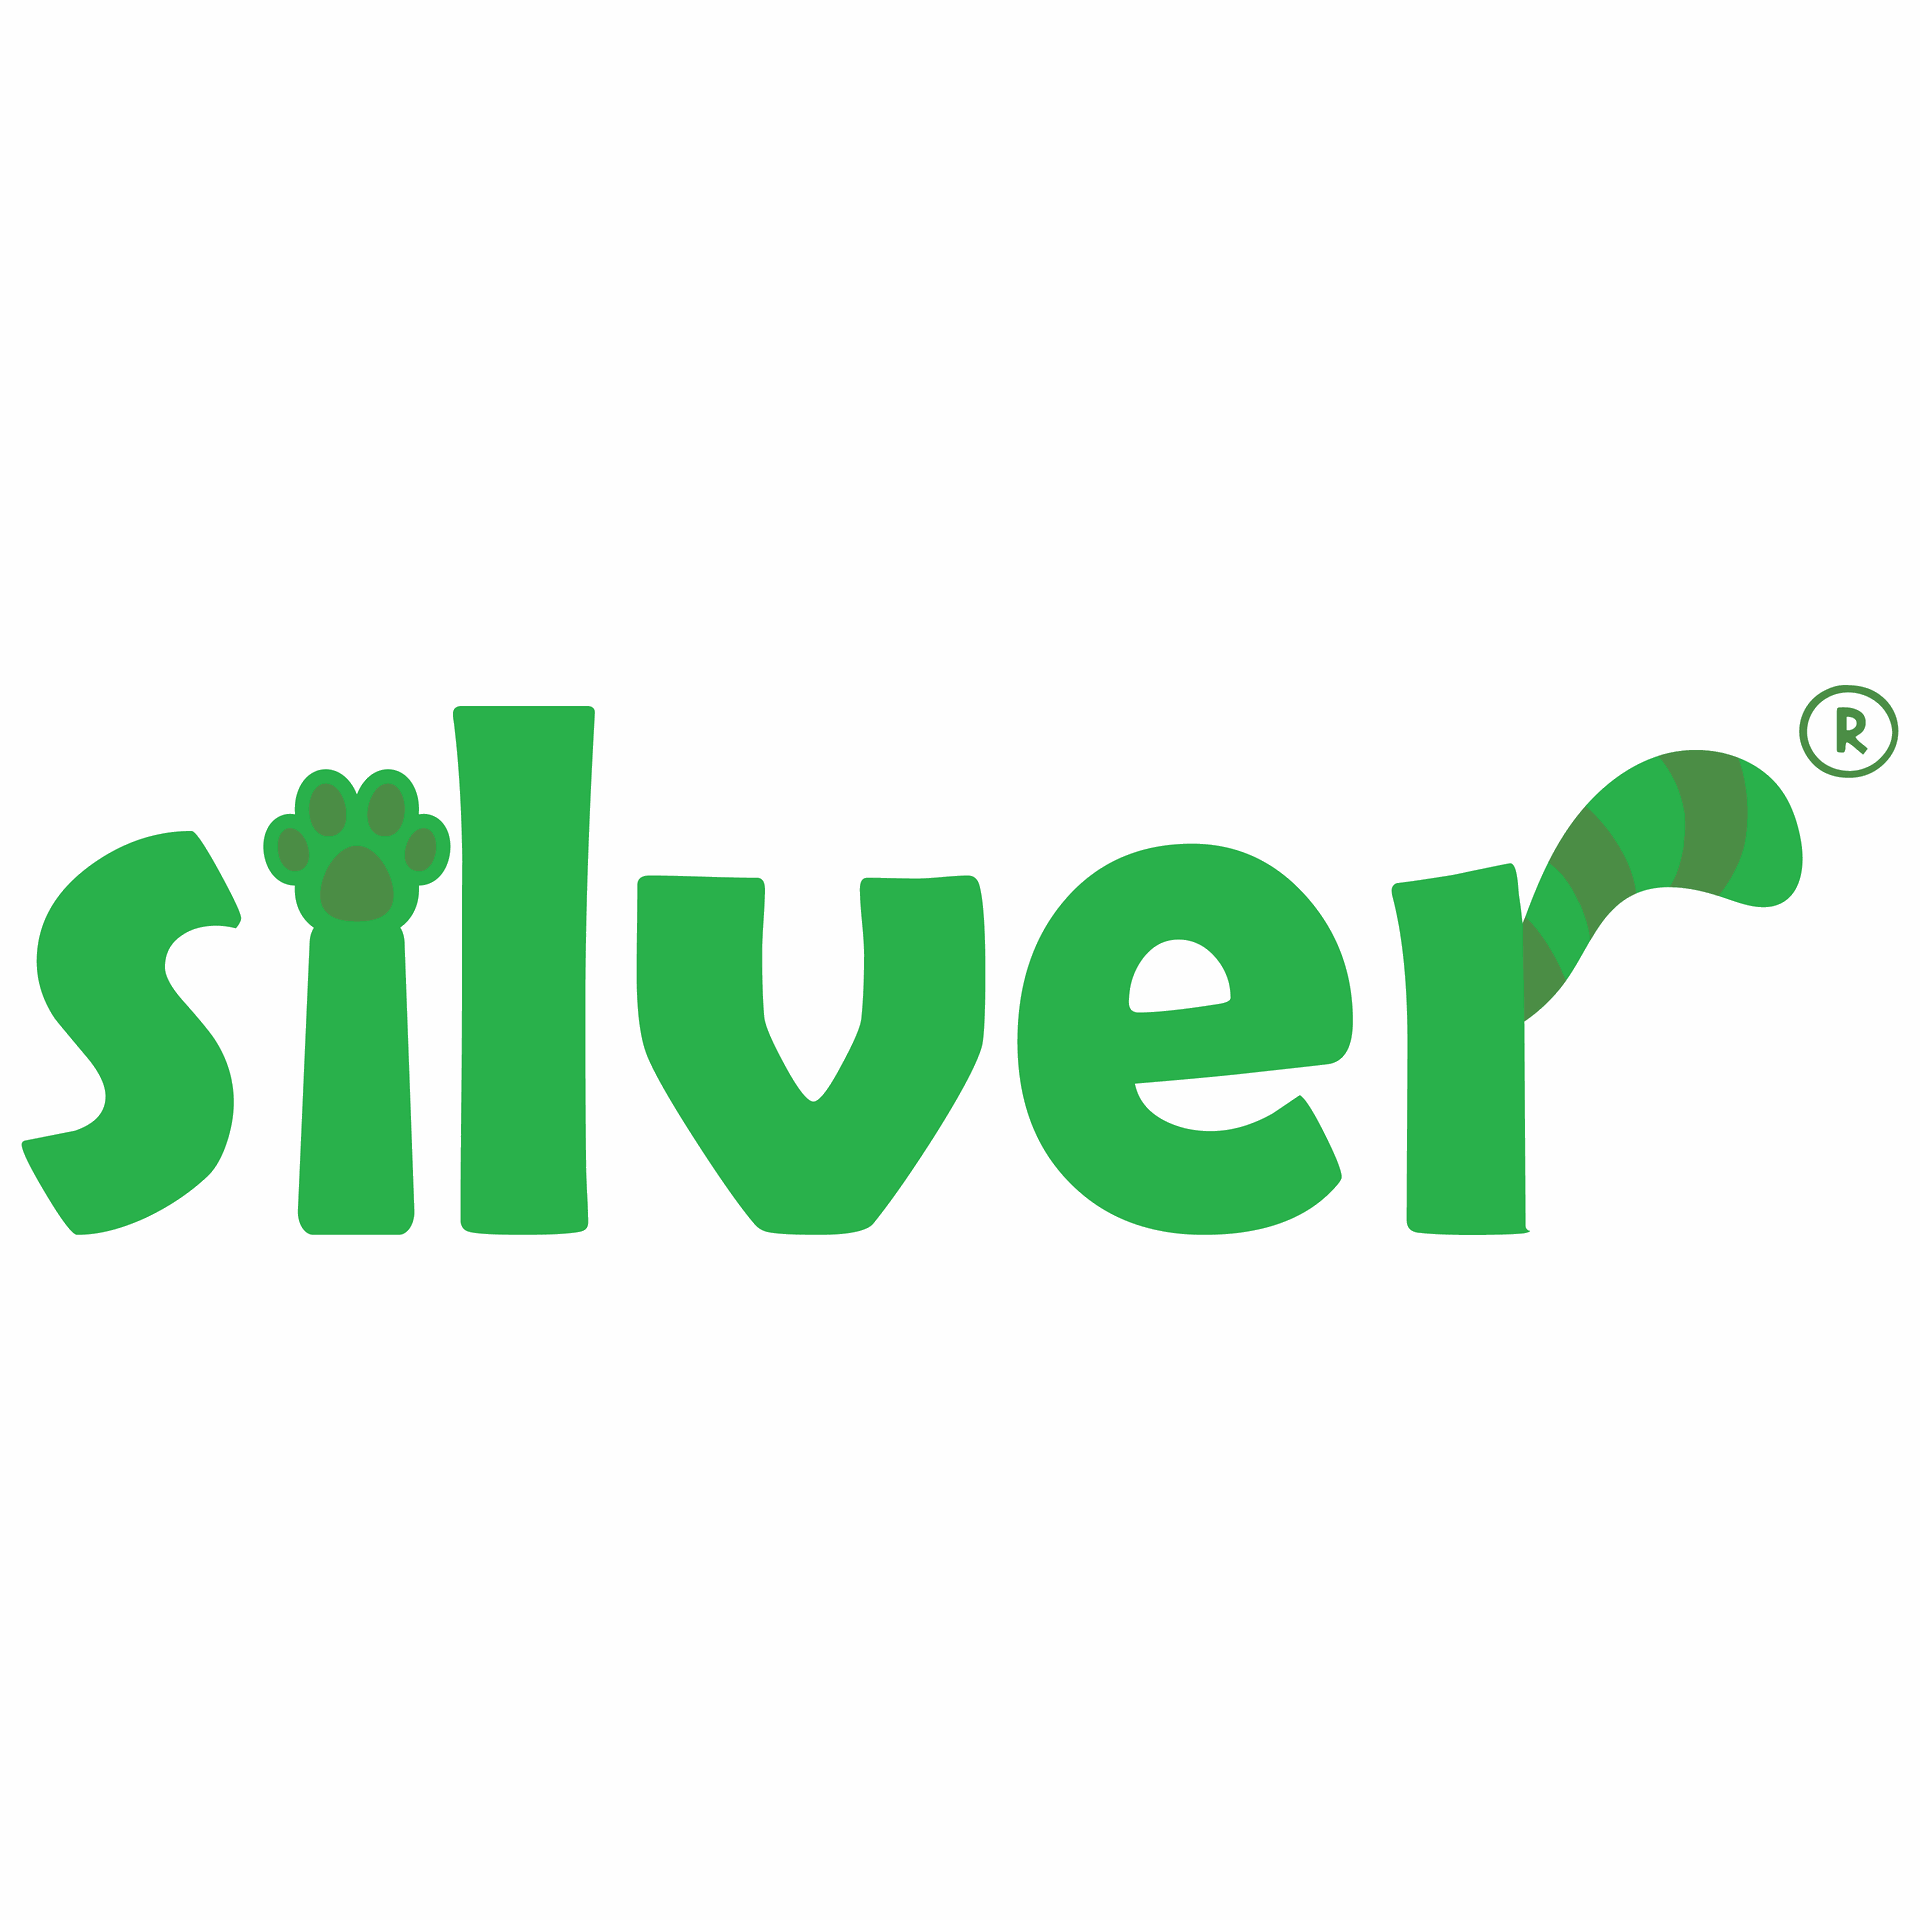 Brand: Silver